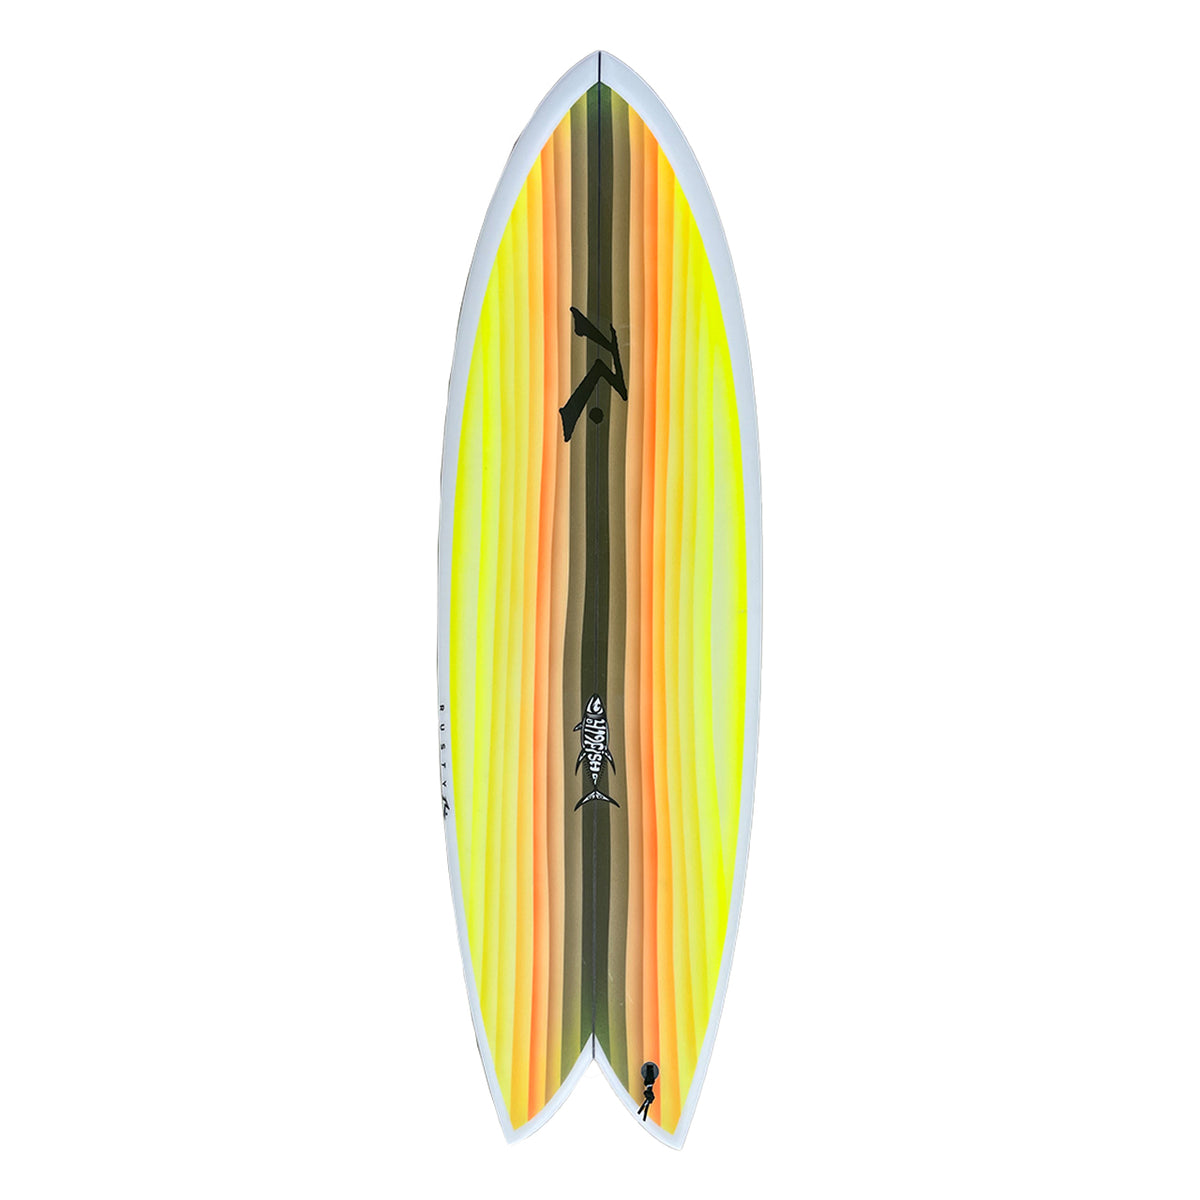 419fish - Alternative - Rusty Surfboards - Top View - Gradient